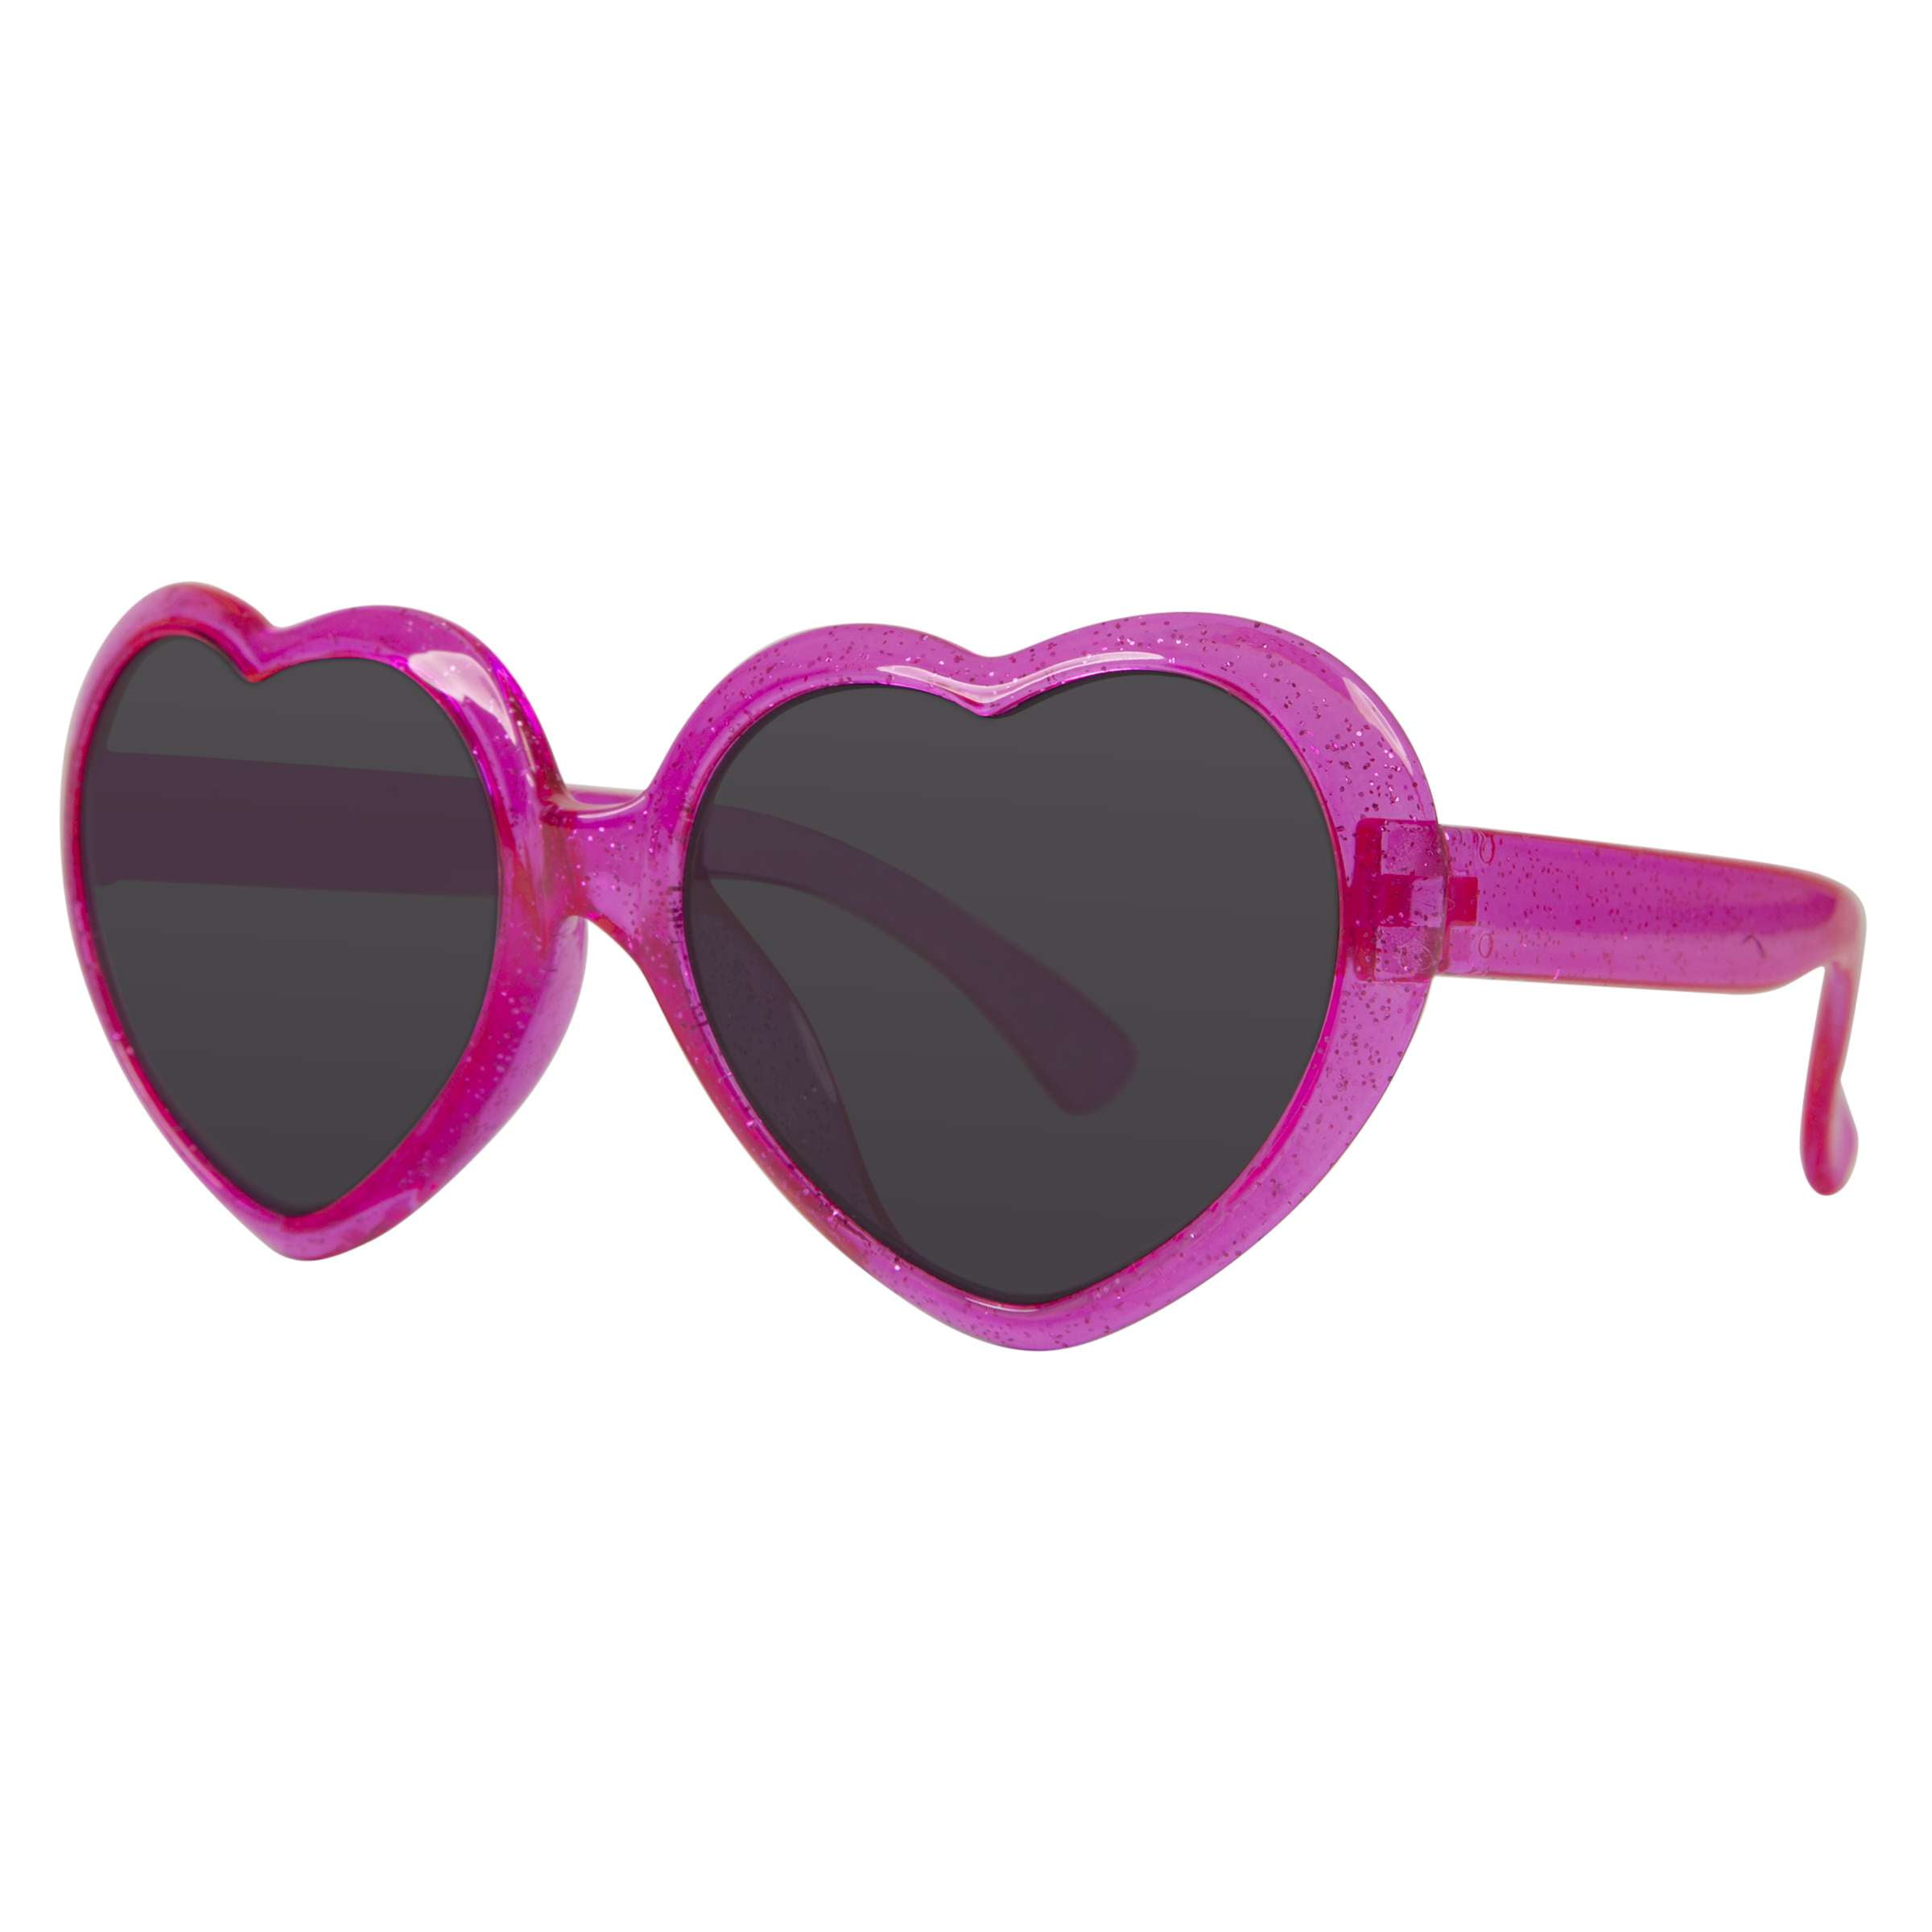 Piranha Eyewear Heart Sunglasses for Kids - Pink with Smoke Lens 